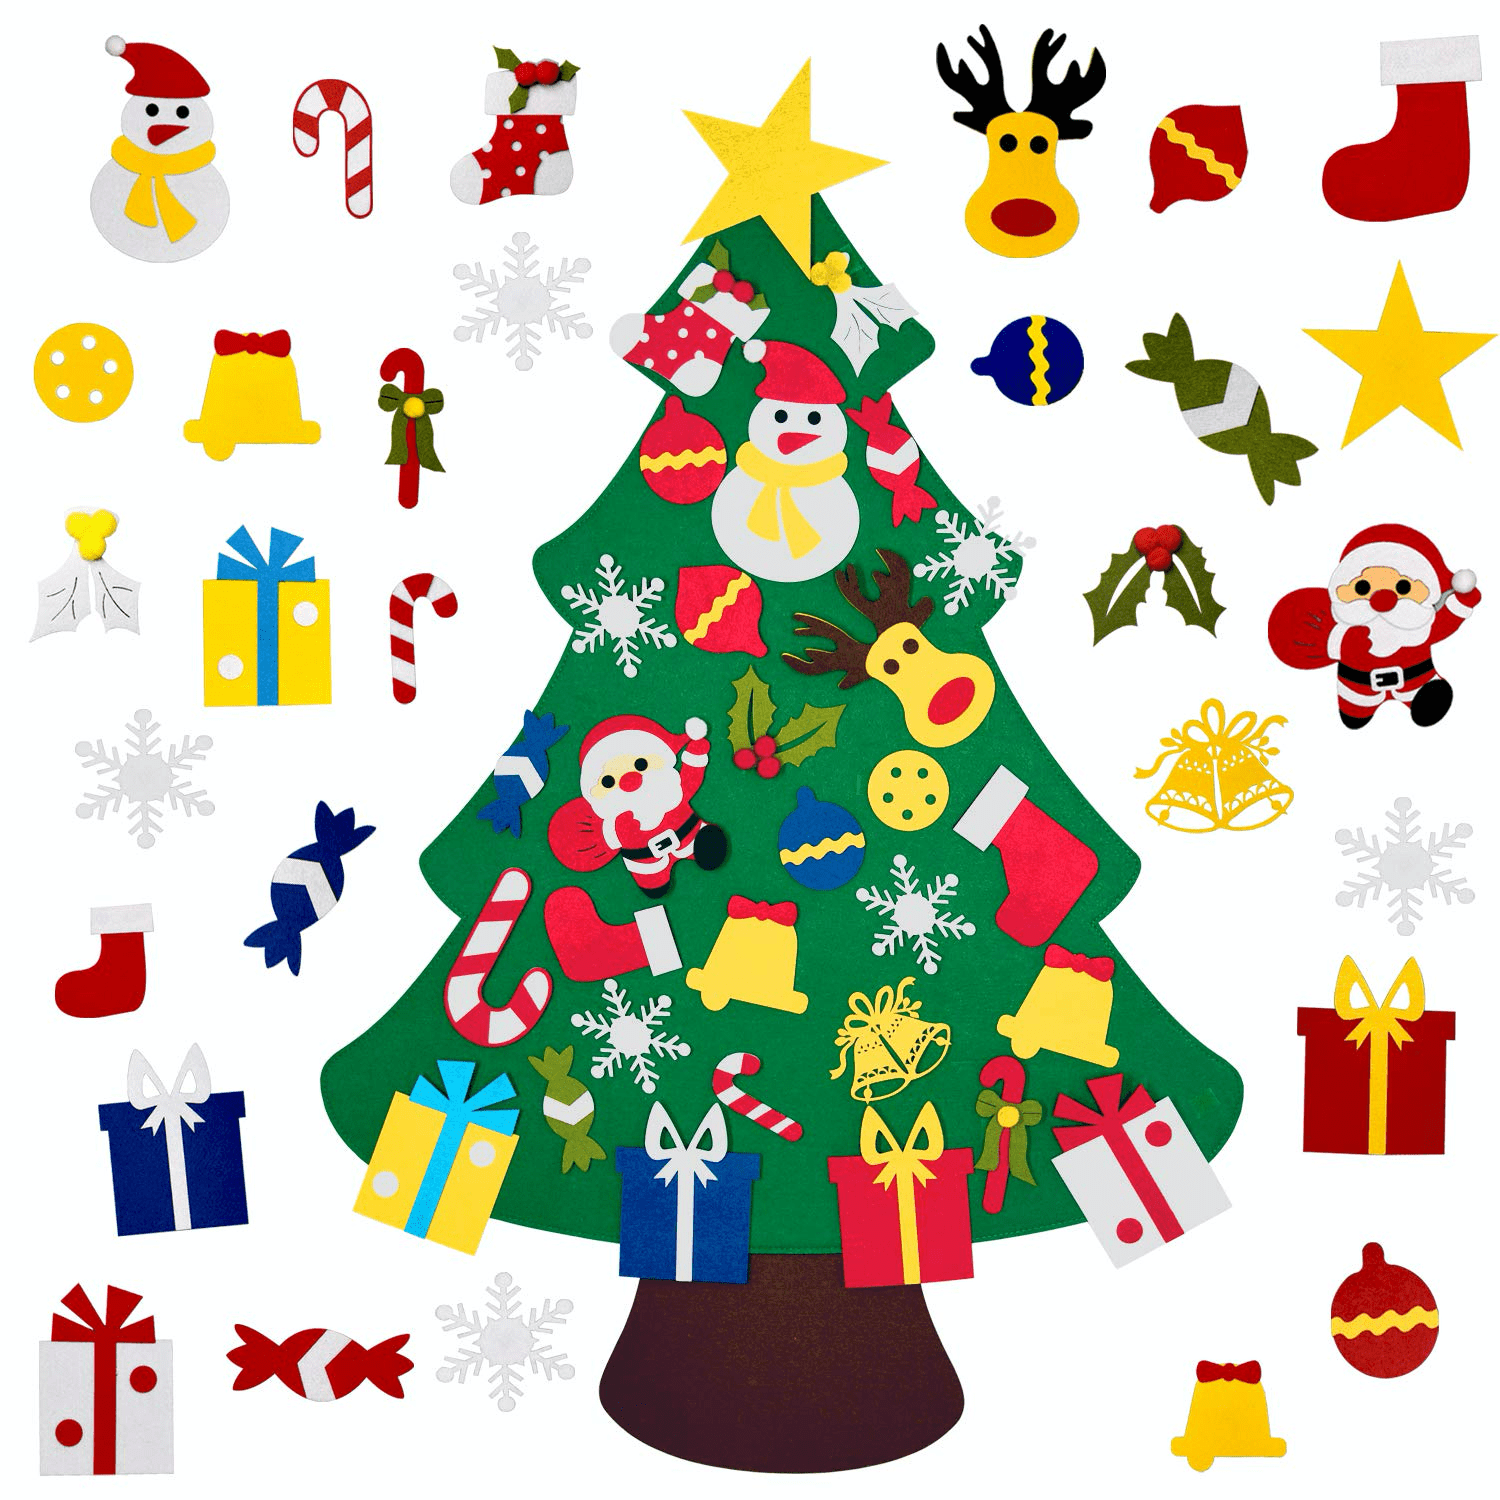 Details about   Christmas Stocking Kids Gift Candy Storage Bag Xmas Tree Hanging Snowflake Bag 